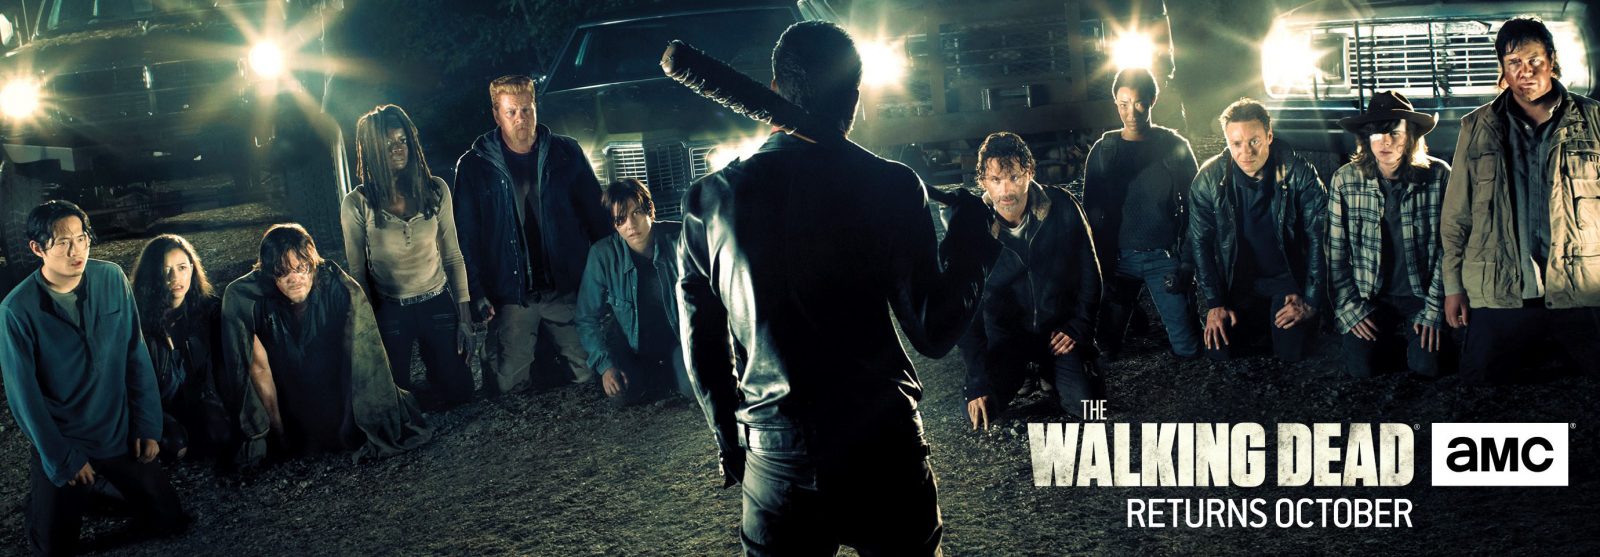 The-Walking-Dead-Season-7-Comic-Con-2016-Banner-Carlost-Negan-TWD